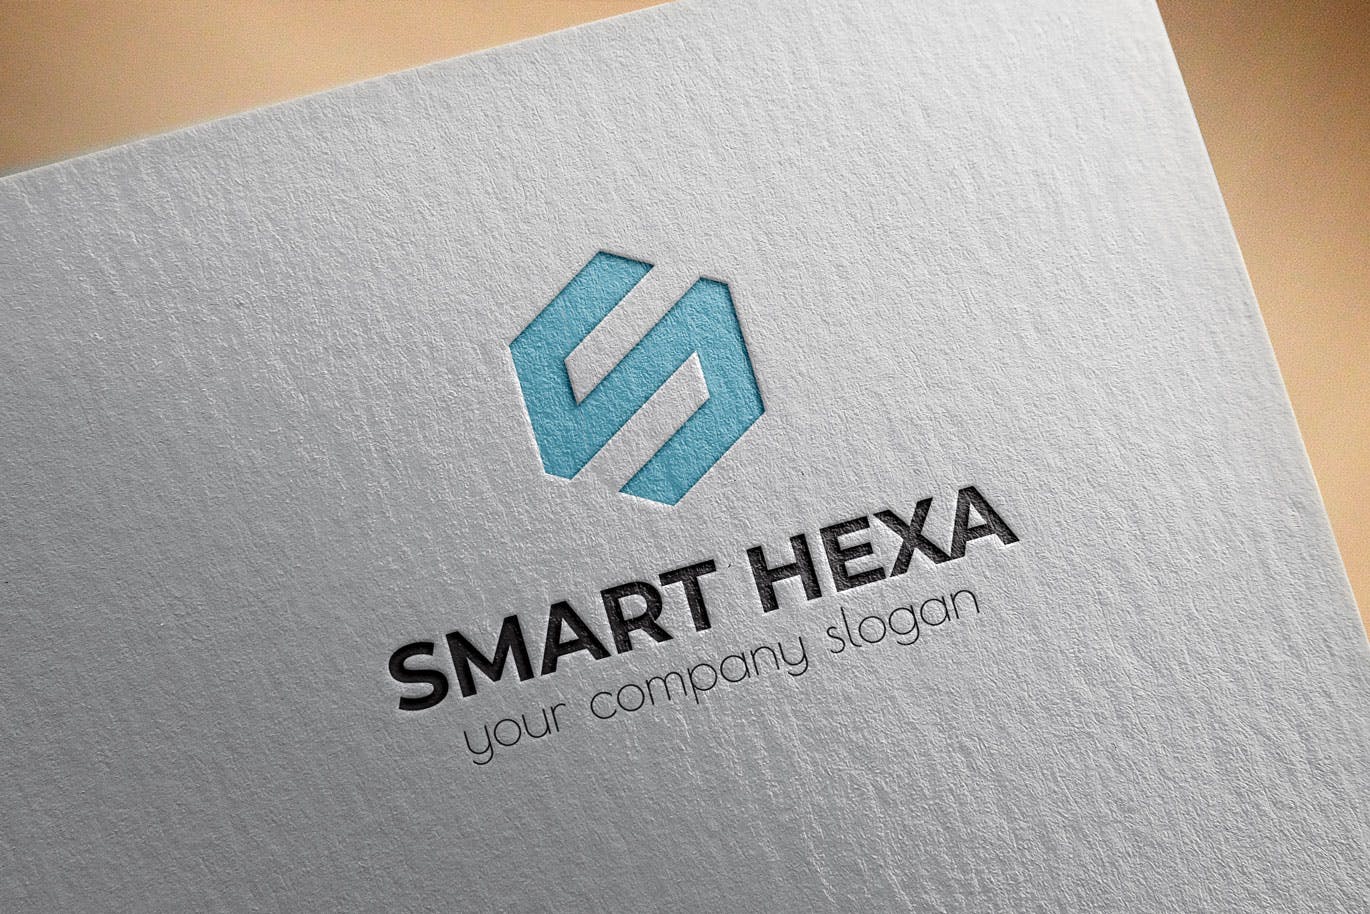 S字母图形Logo设计素材库精选模板 Smart Hexa Awesome Logo Template插图(2)